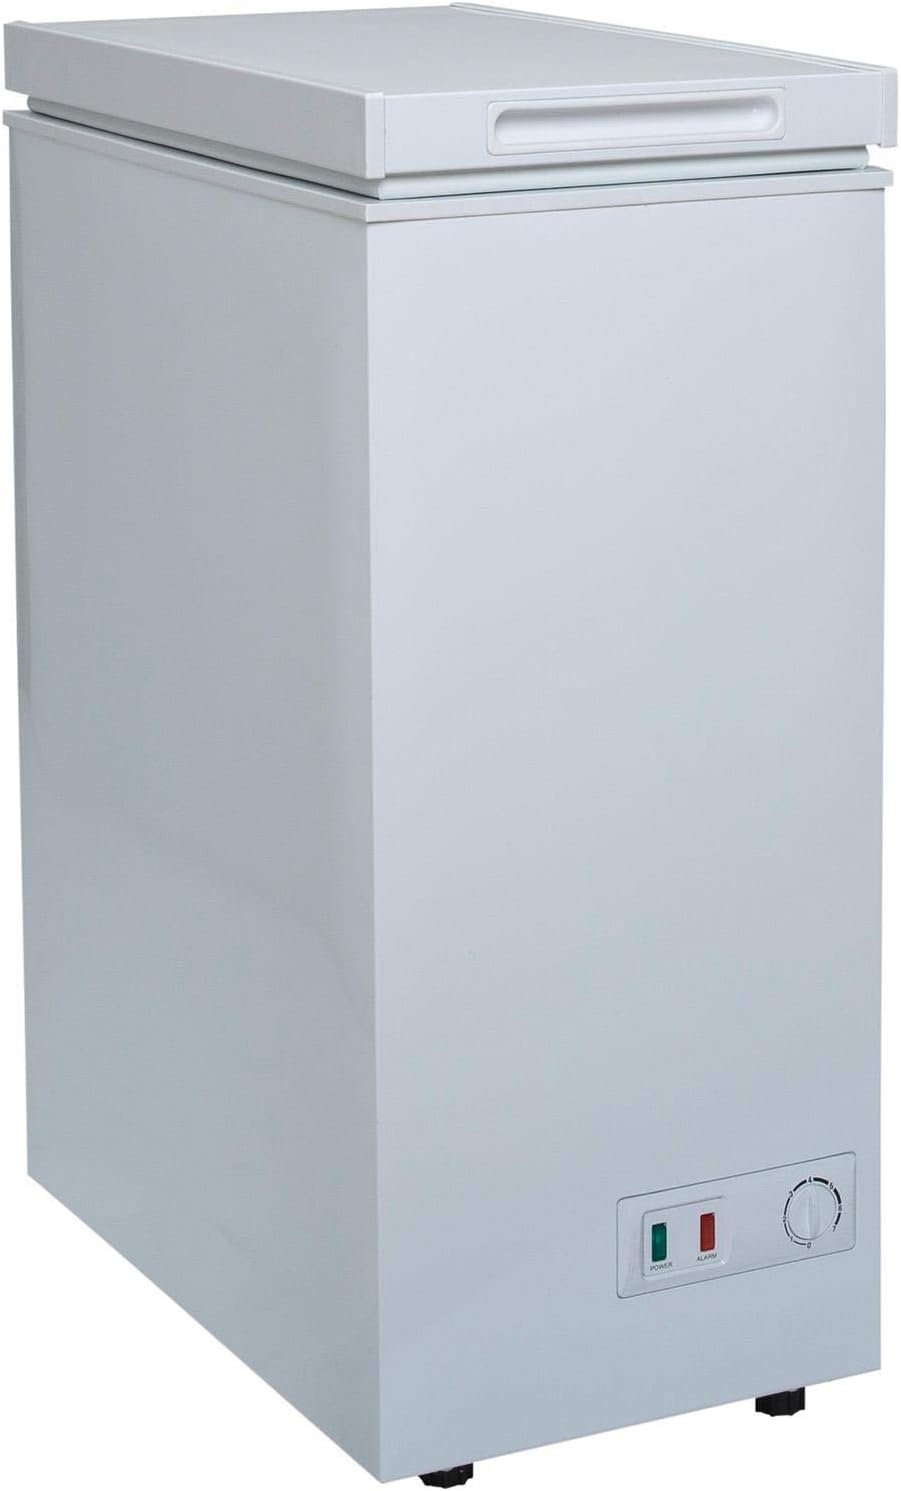 SIA White 36cm Compact Chest Freezer For Caravans, Mobile Home, Camper van, Boat - Amazing Gadgets Outlet